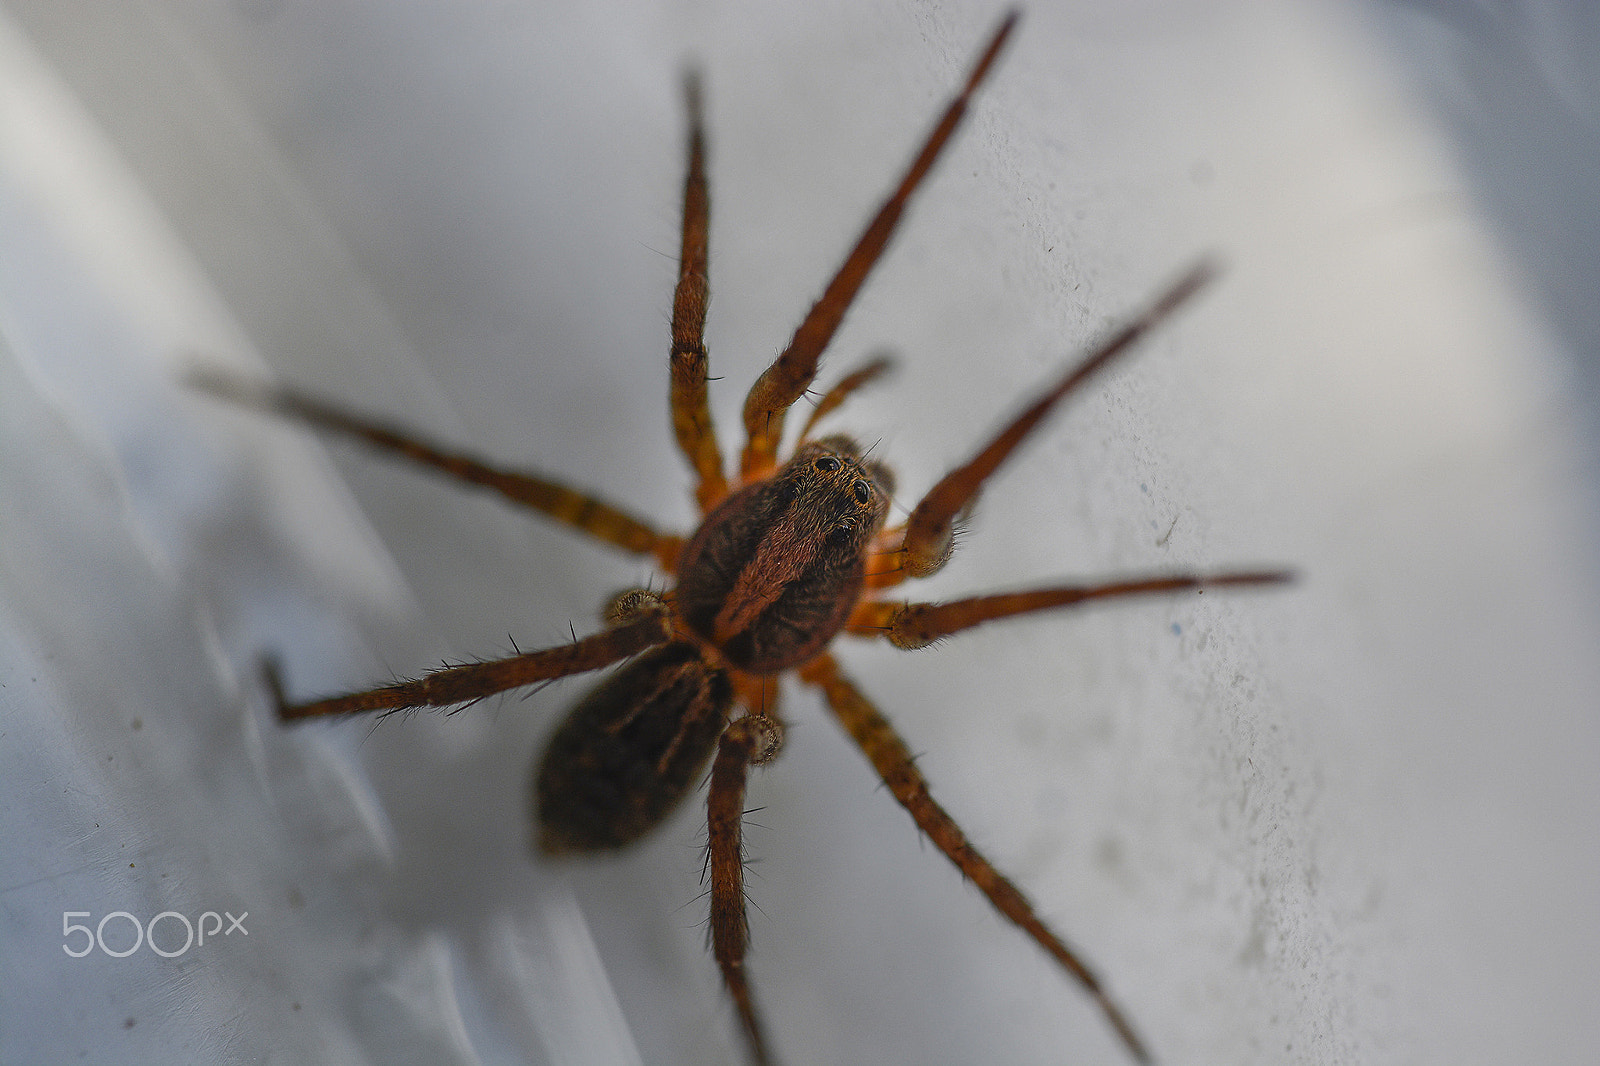 Sigma 150mm F2.8 EX DG Macro HSM sample photo. Aranha estranha -curious garden spider photography